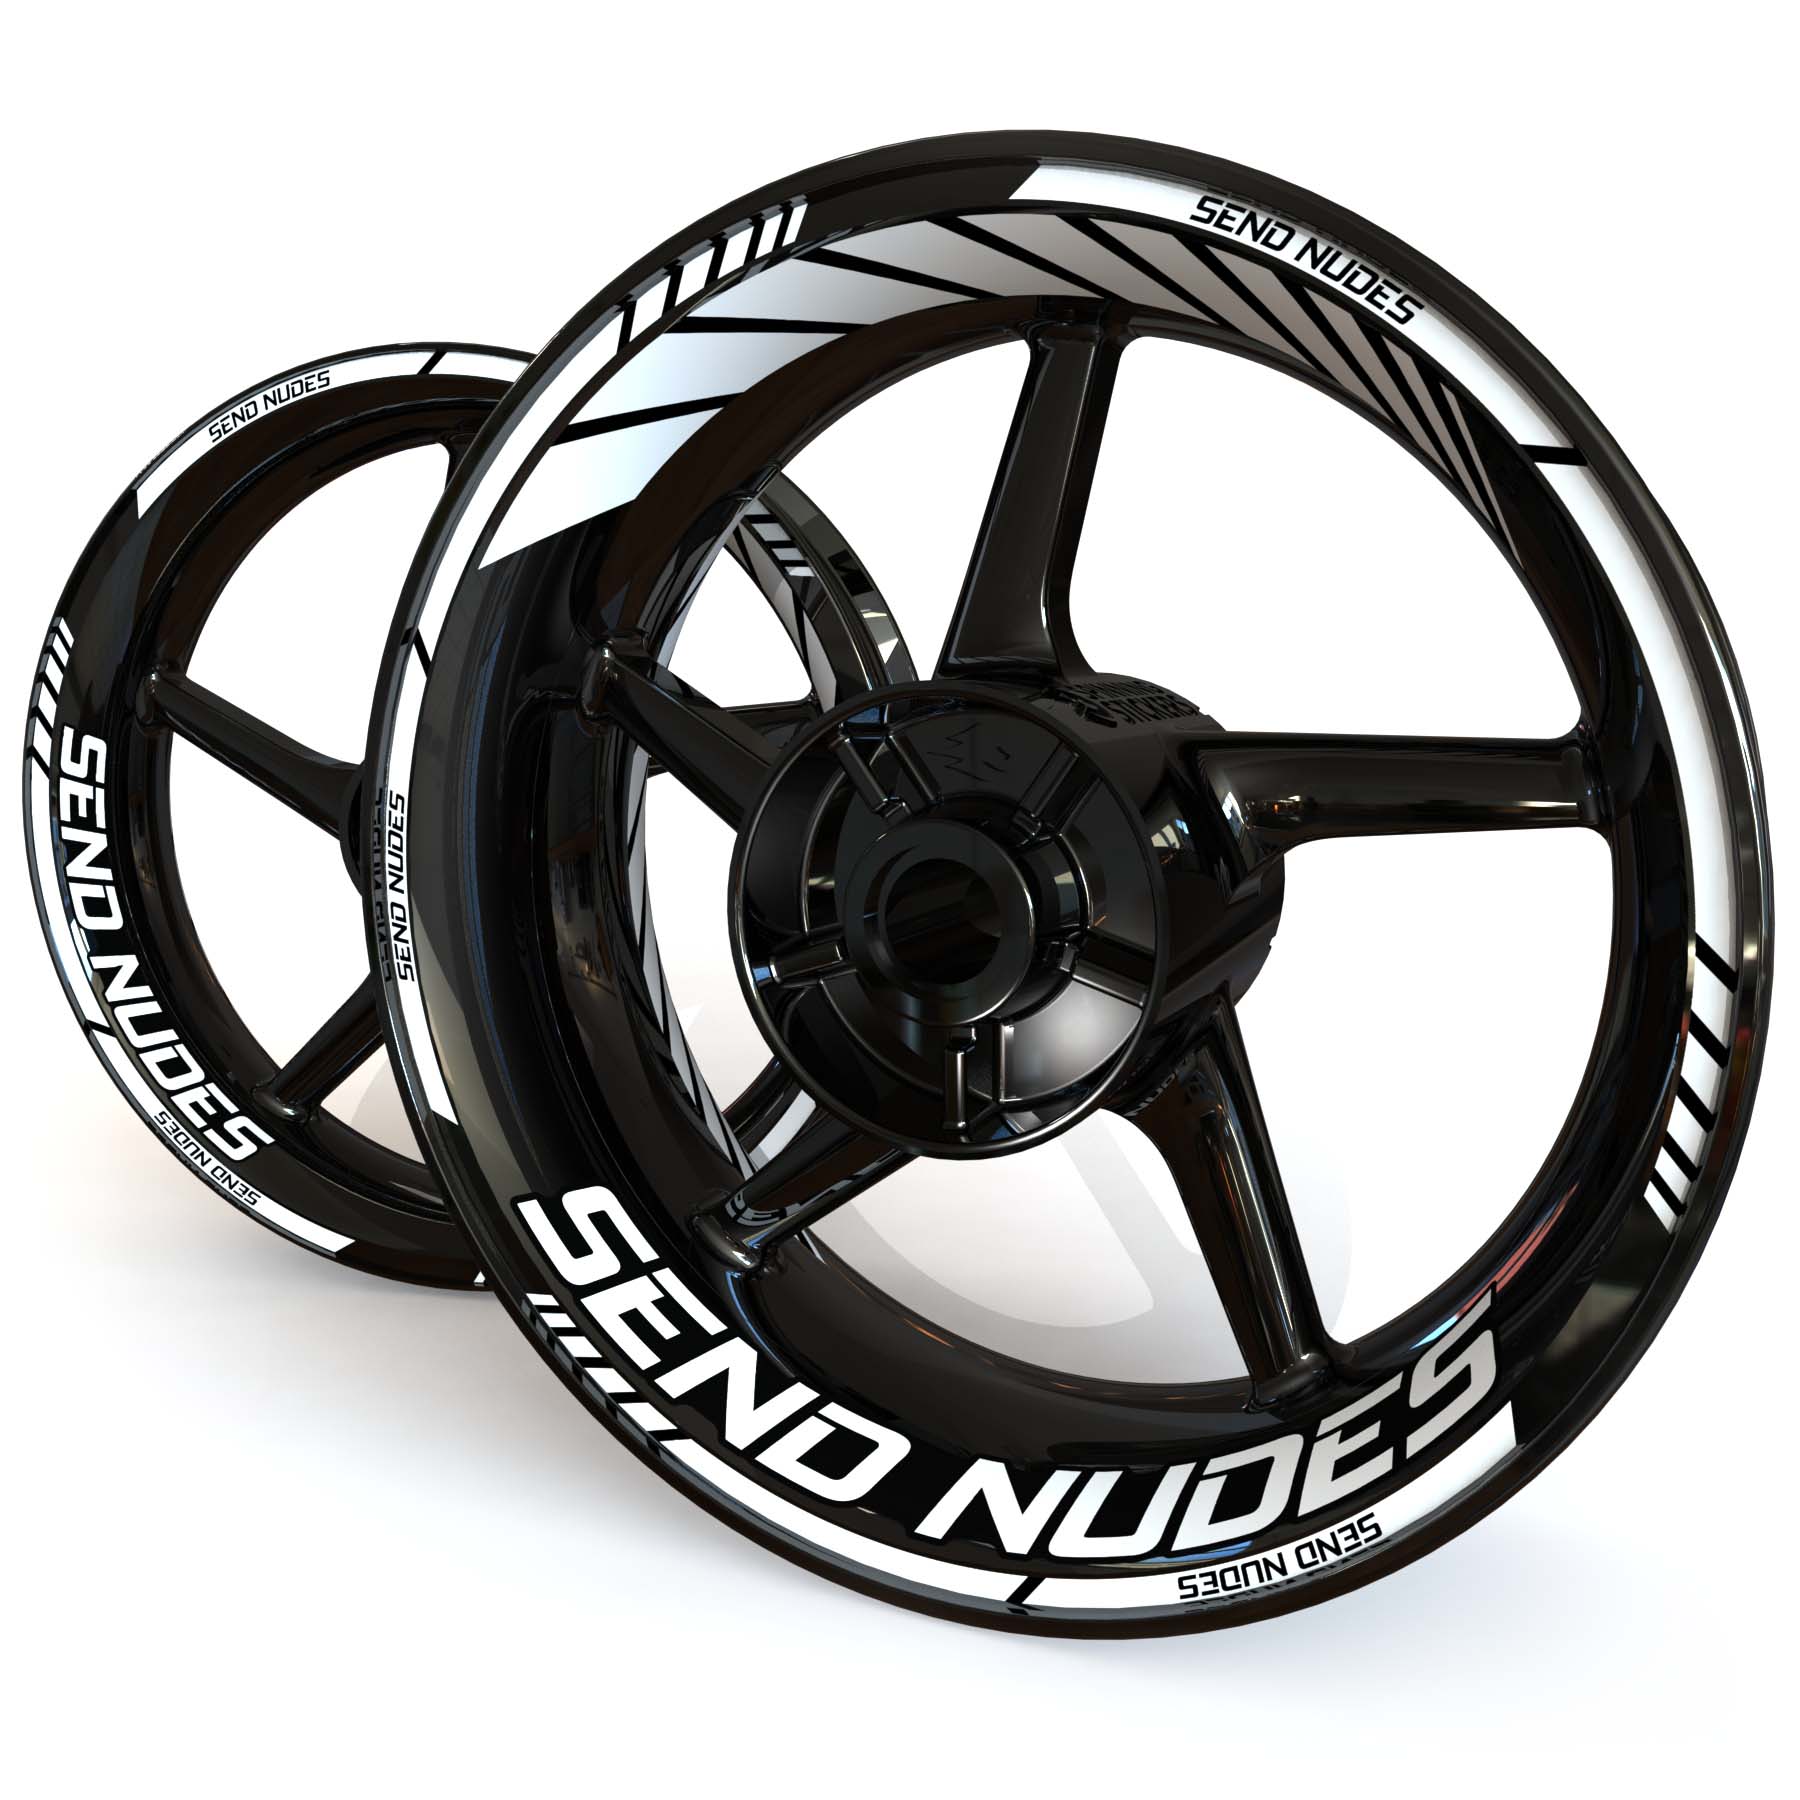 Send Nudes Wheel Stickers - "Classic" Standard design